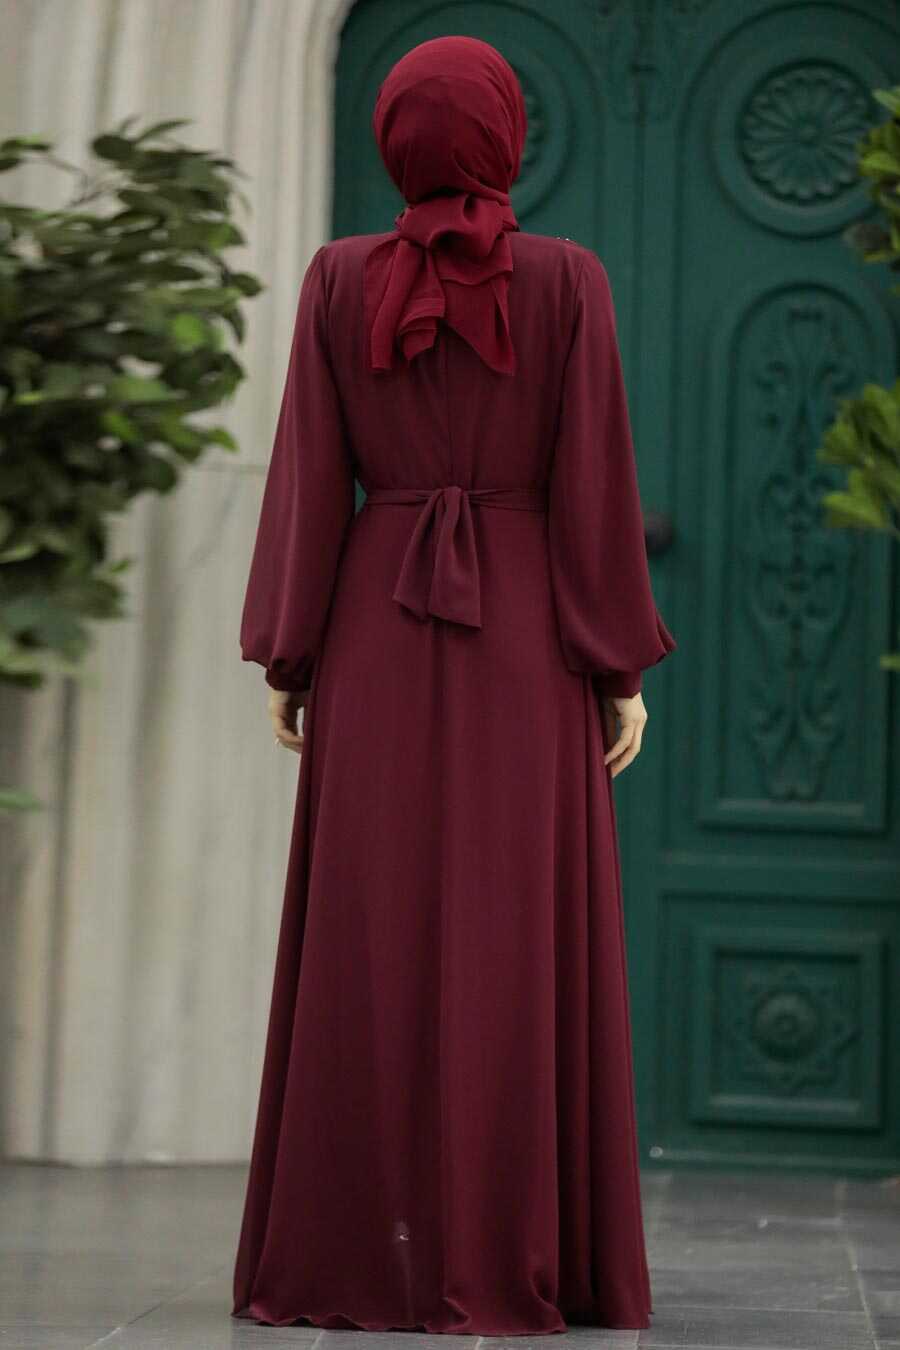 Neva Style - Modern Claret Red Modest Prom Dress 22153BR